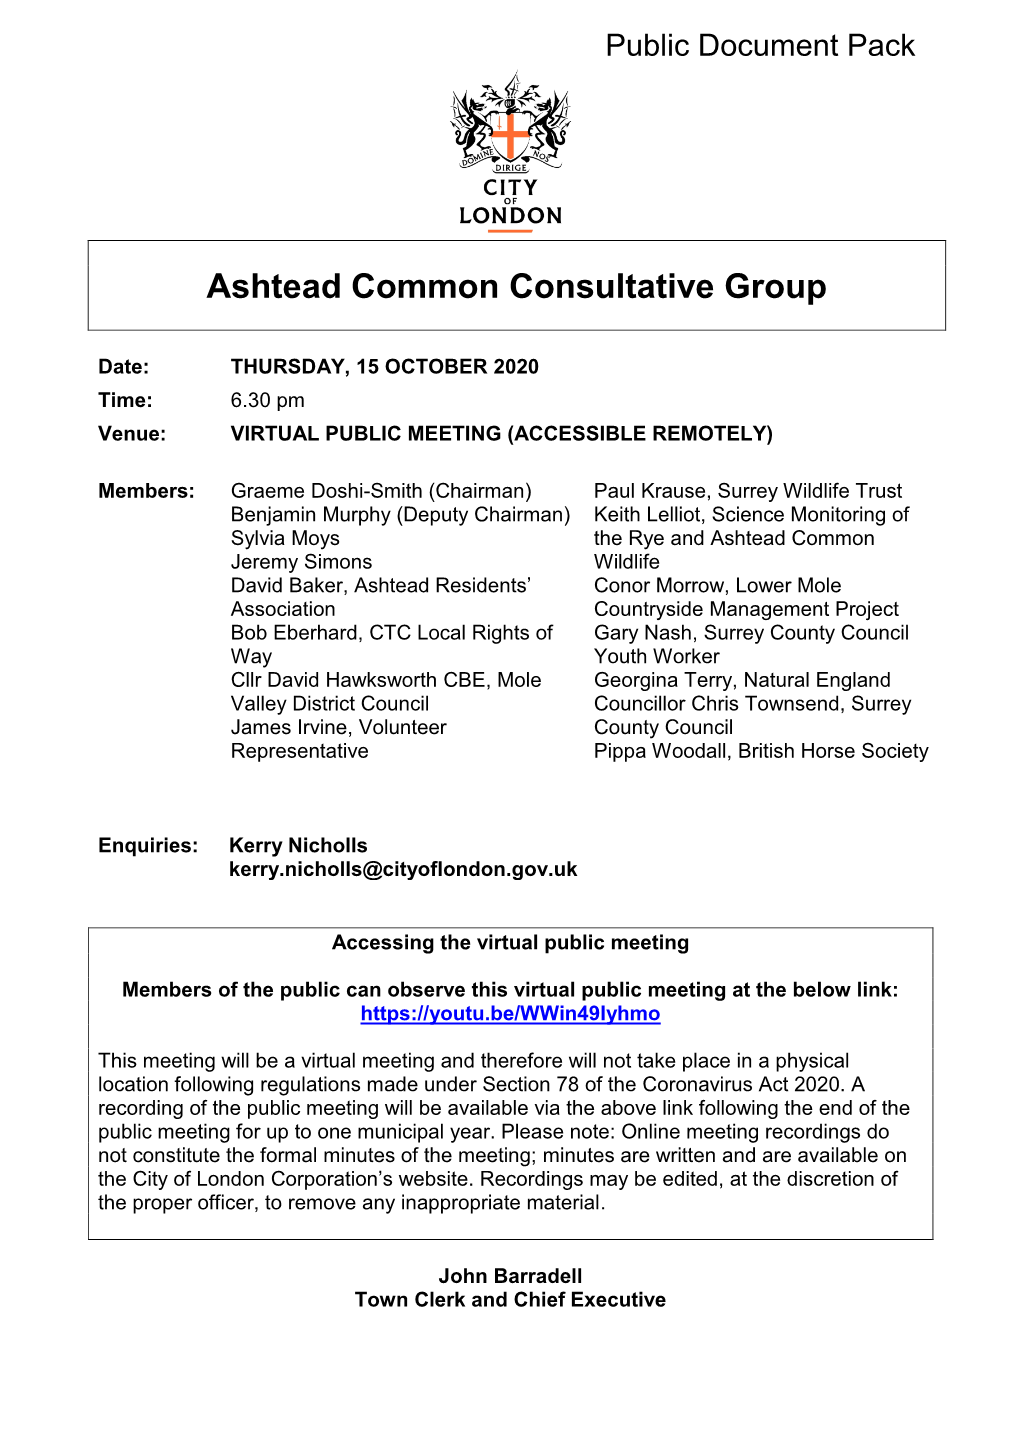 Ashtead Common Consultative Group